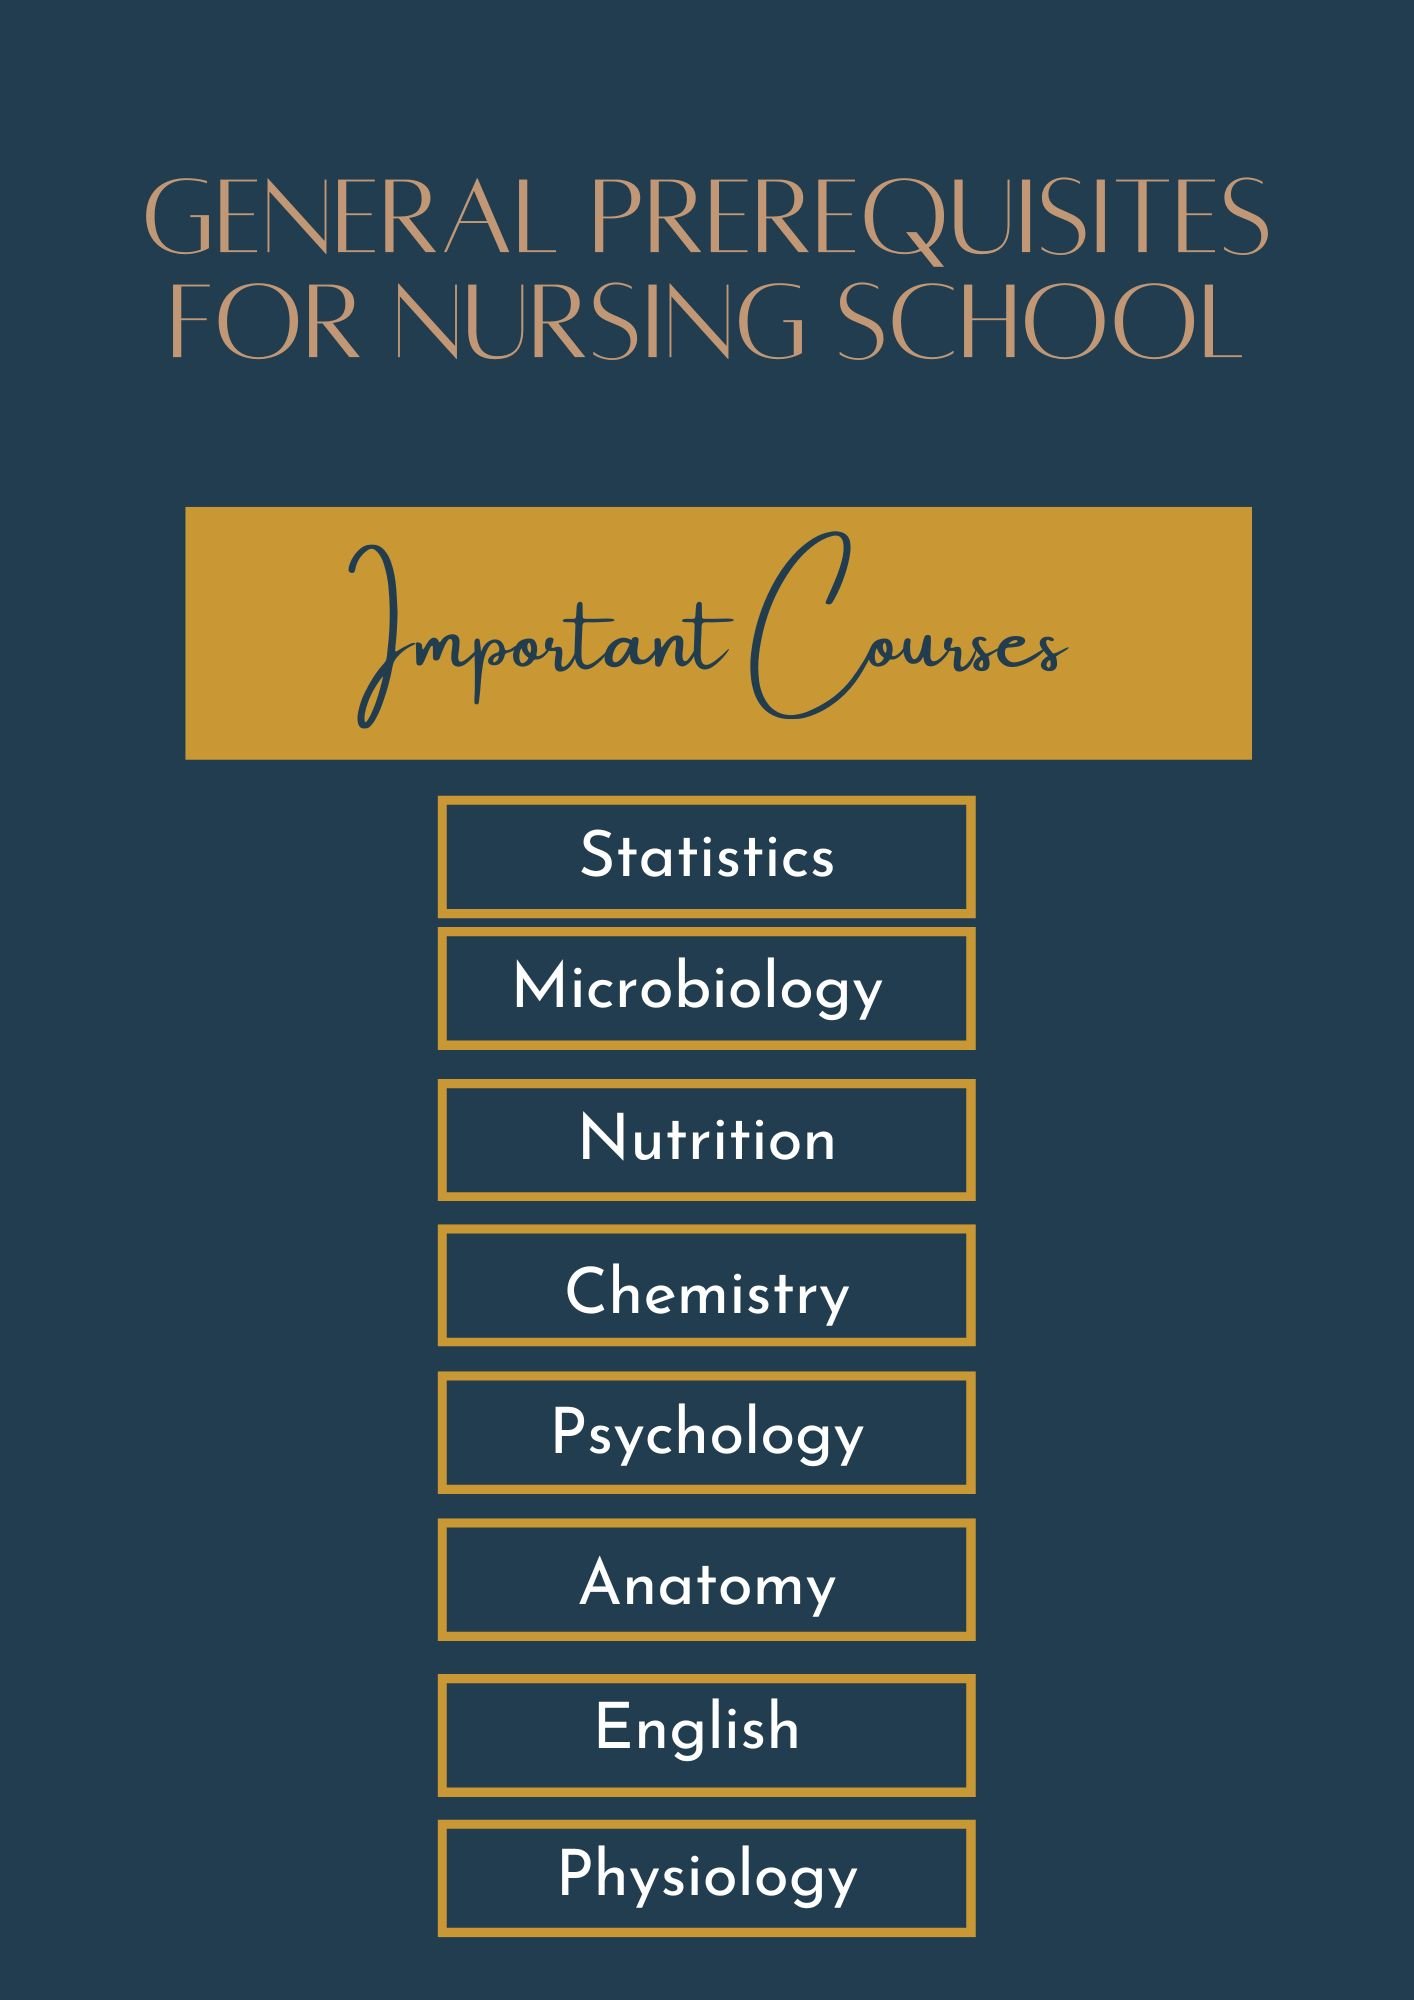 General Prerequisites for Nursing School